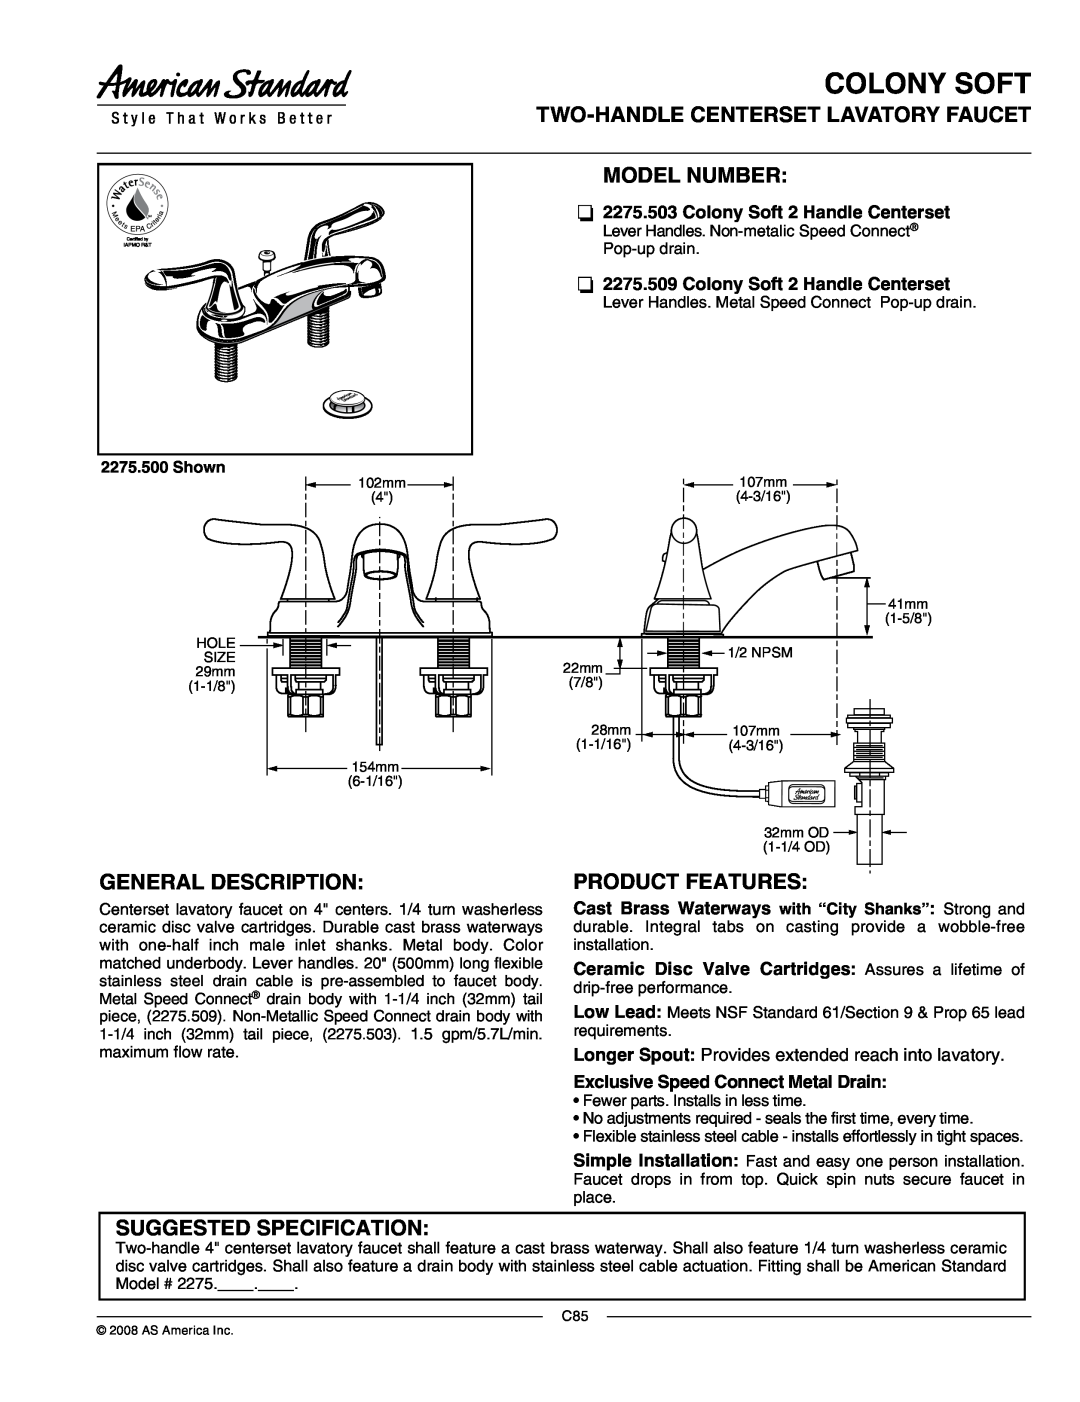 American Standard 2275.503 manual Colony Soft, Two-Handlecenterset Lavatory Faucet Model Number, General Description 